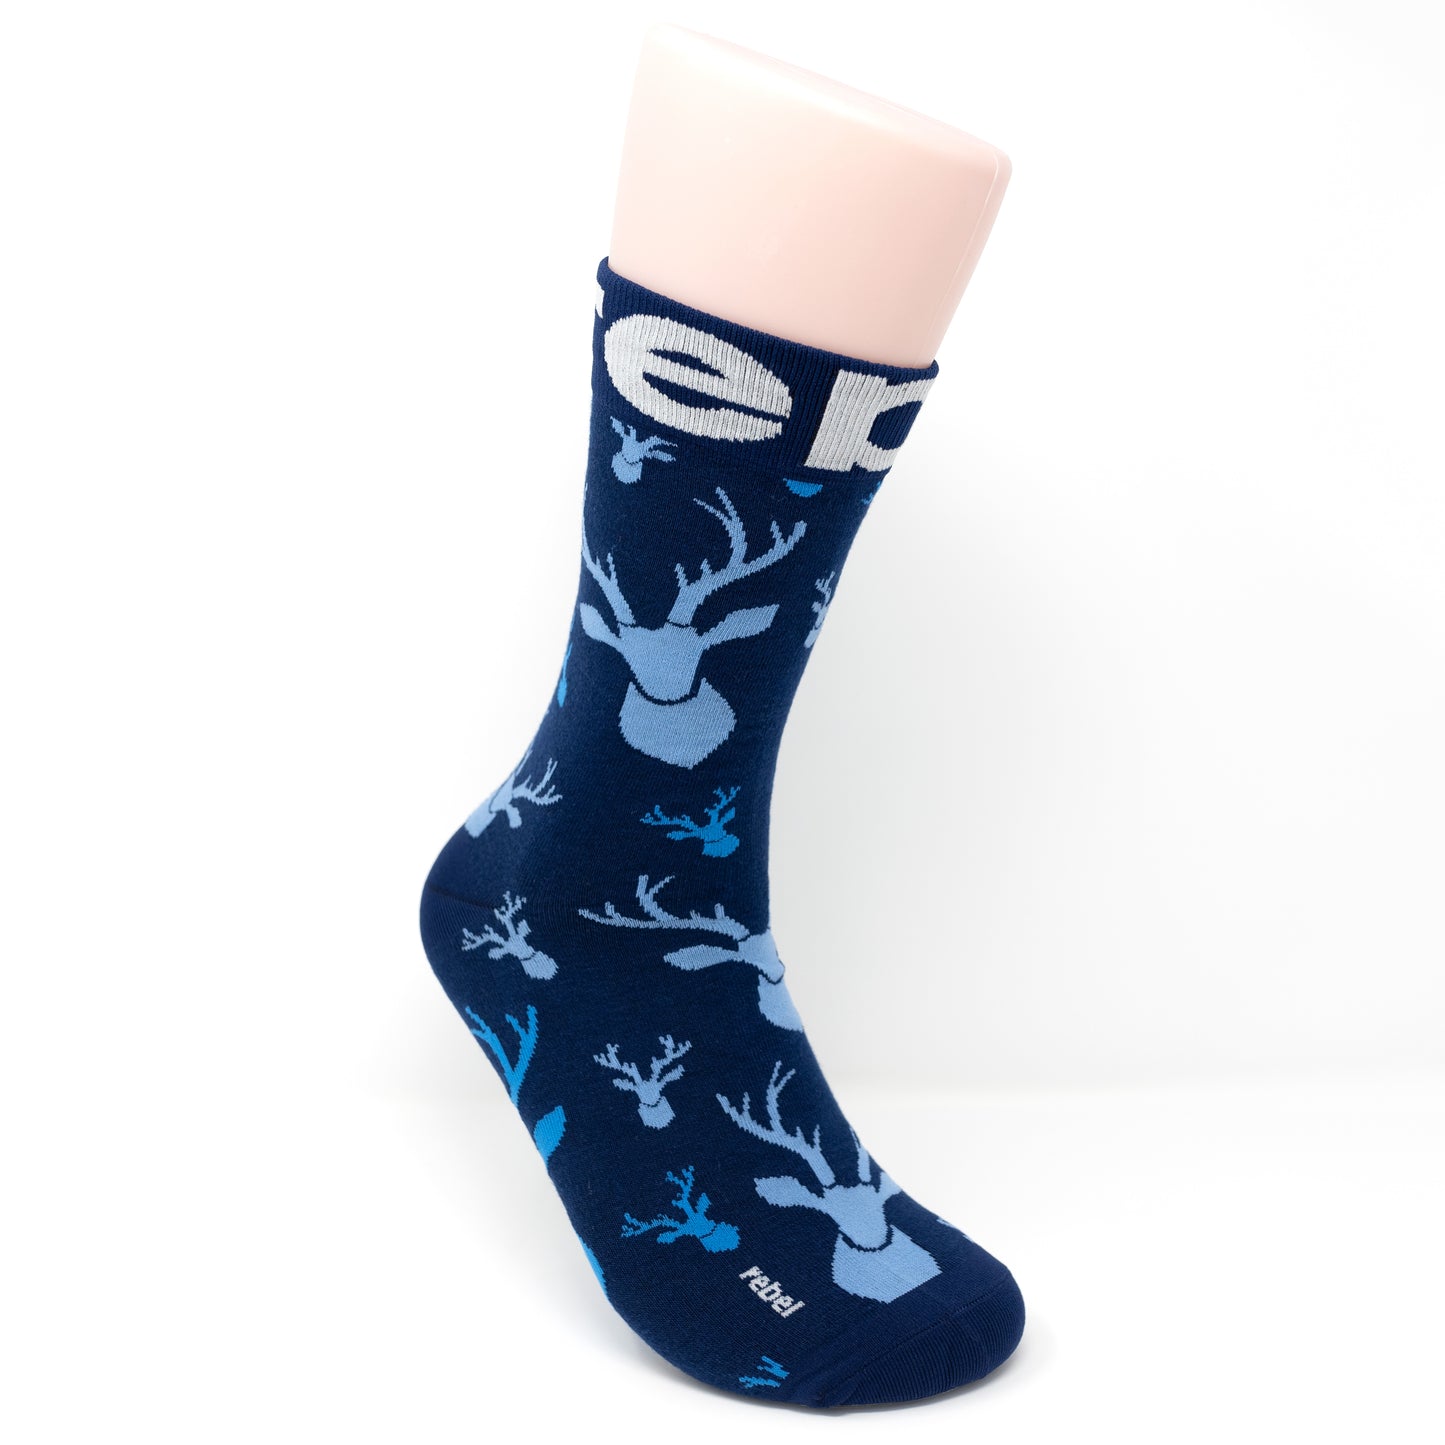 Rebel Fashion's Funky Blue Deer Socks